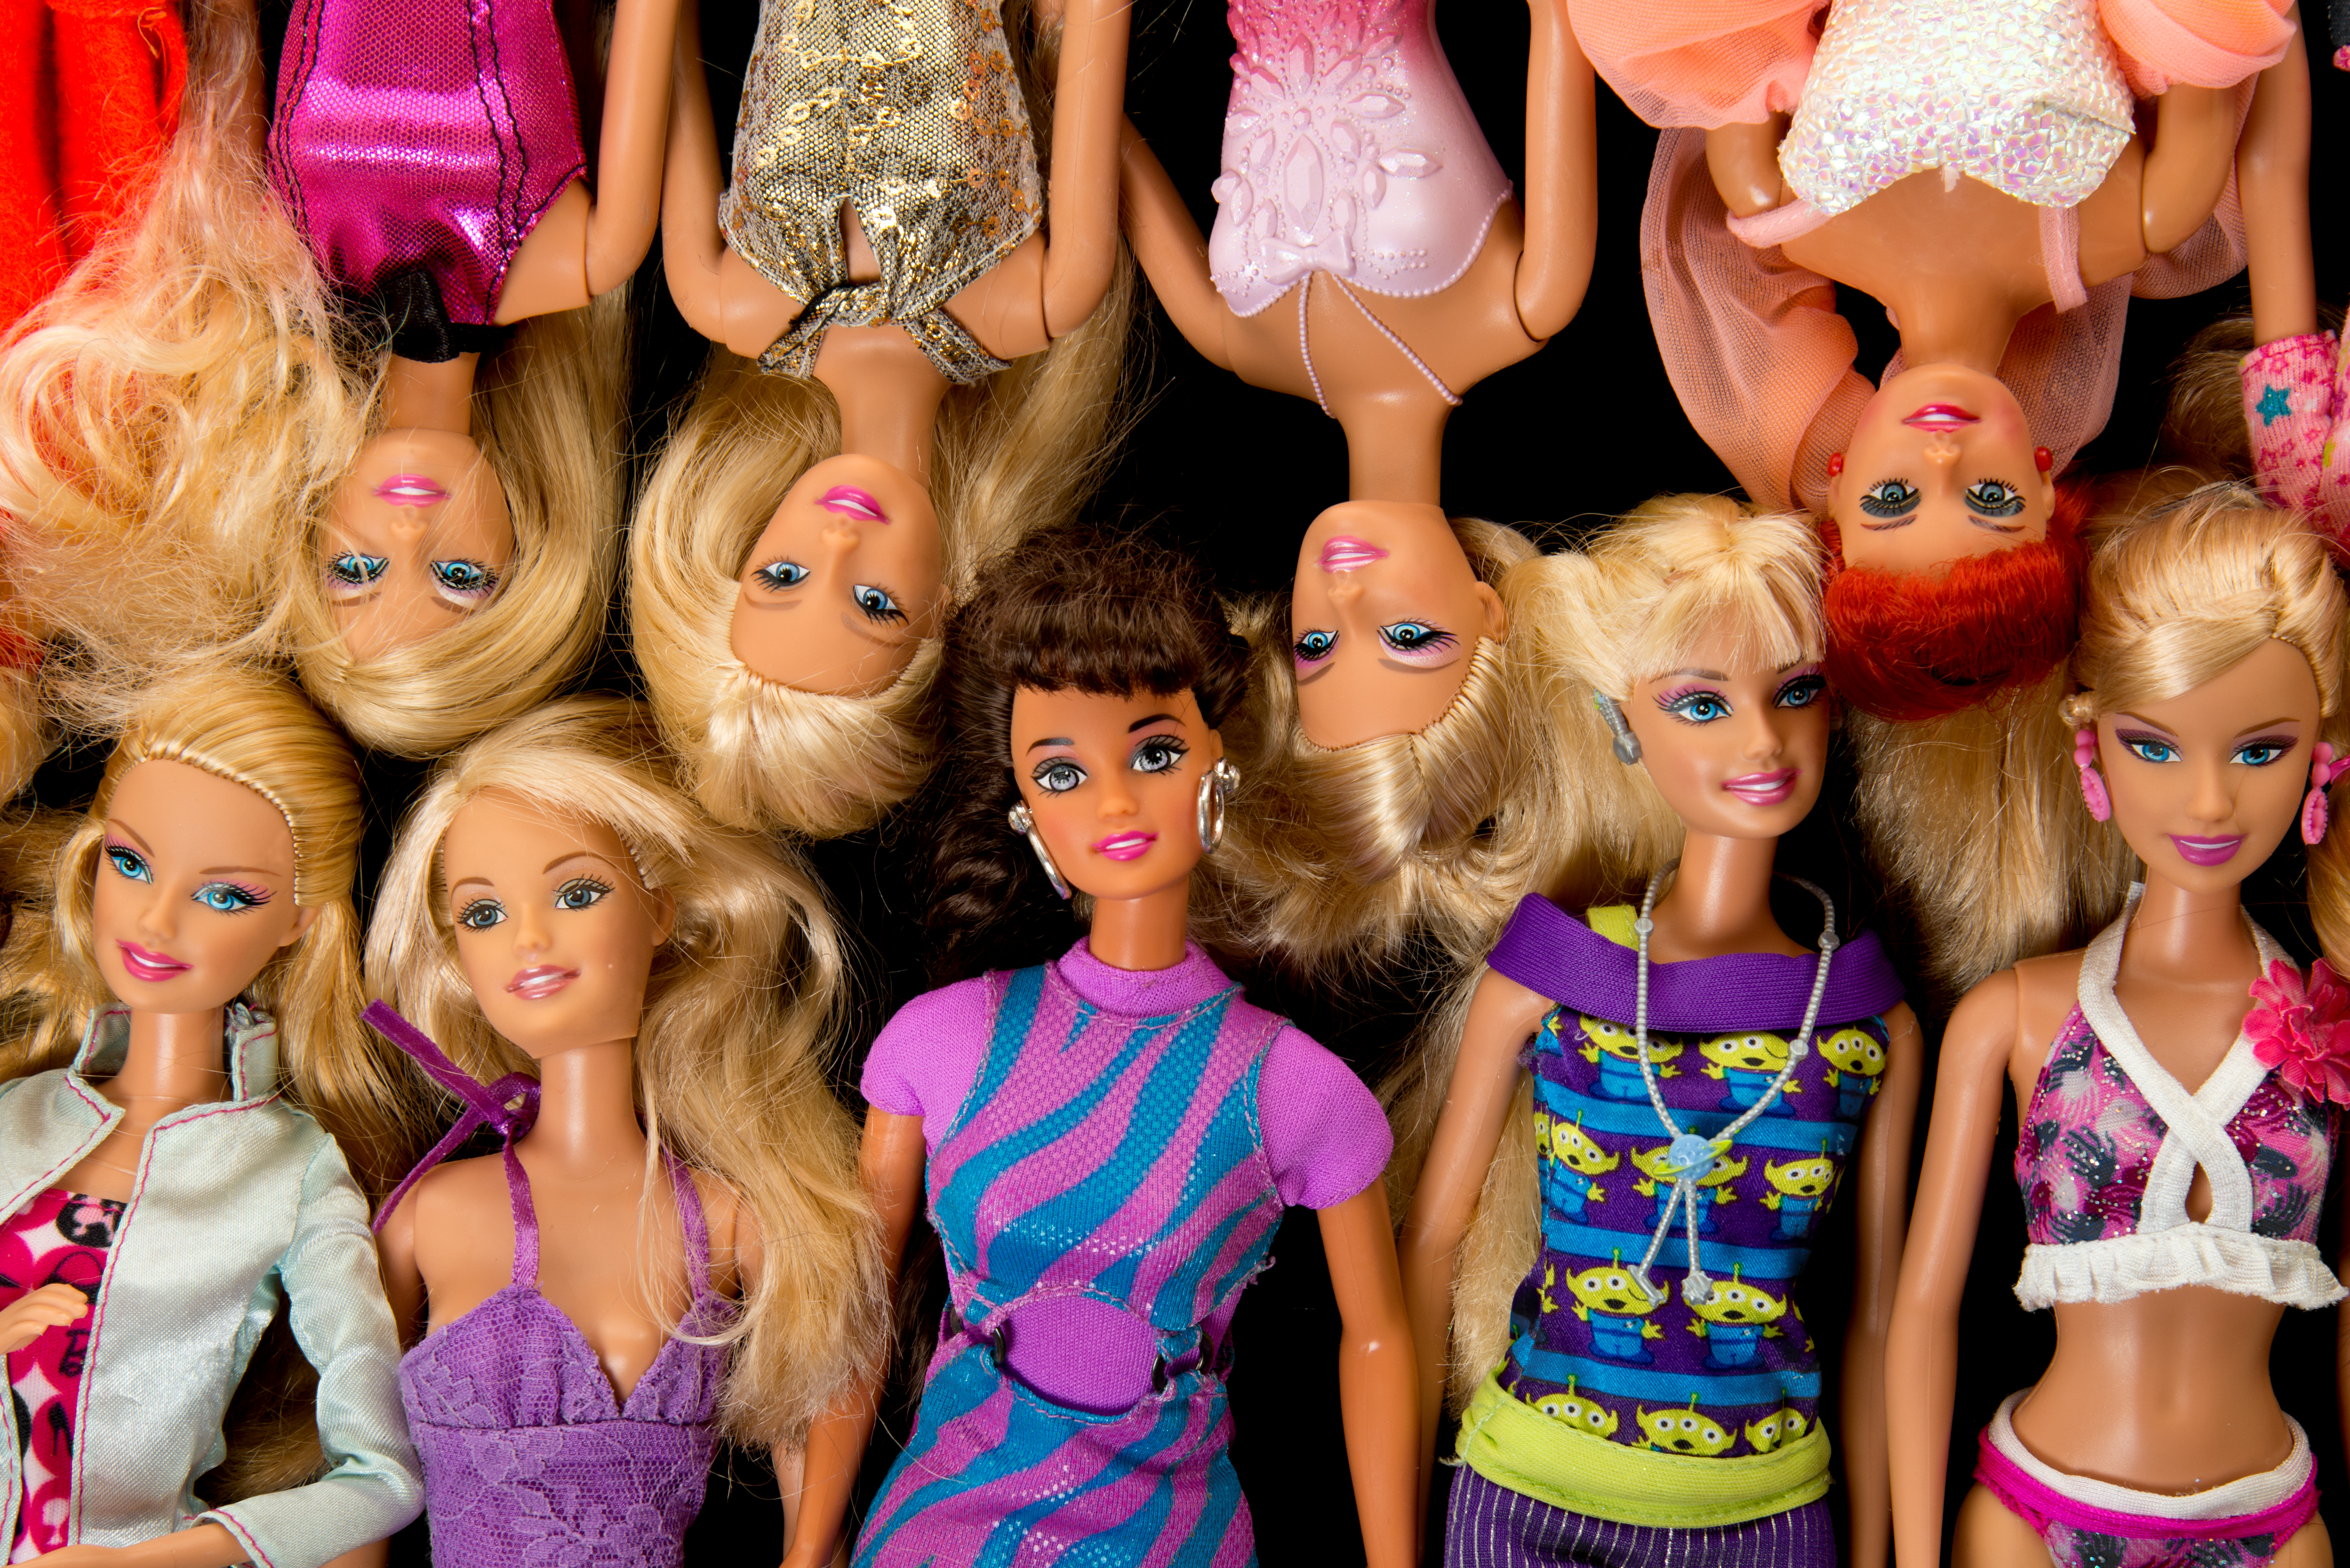 very cheap barbie dolls